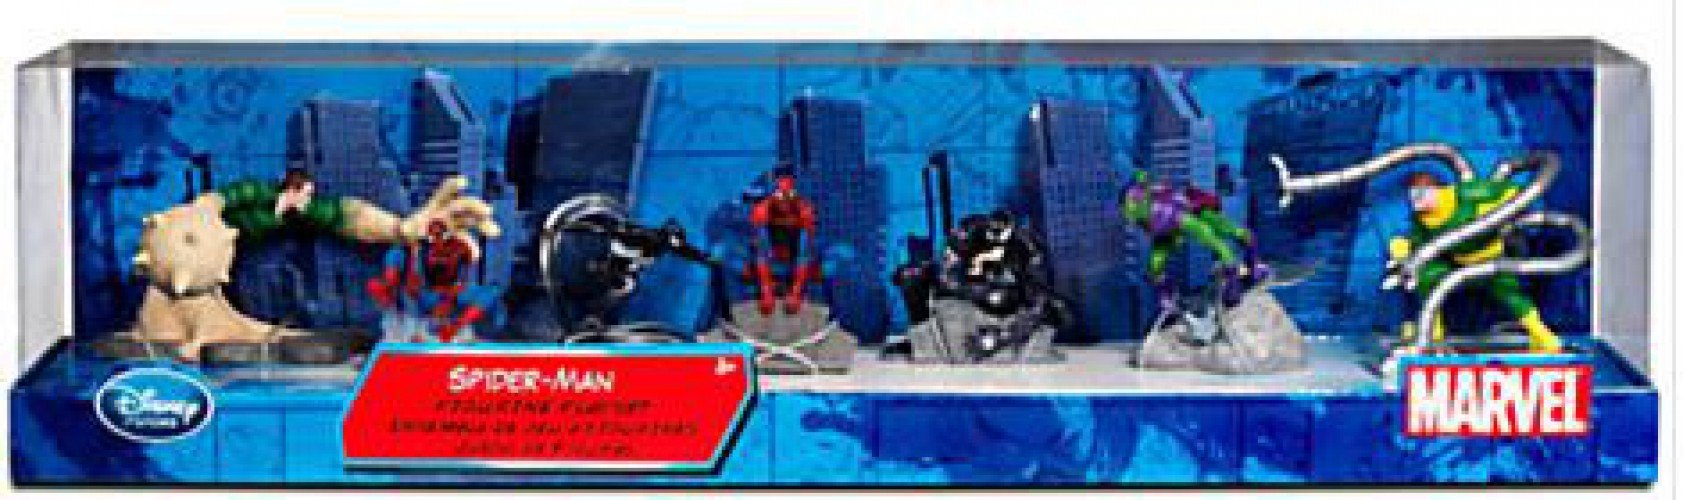 Disney Exclusive Marvel 7Pack SpiderMan Figurine Playset